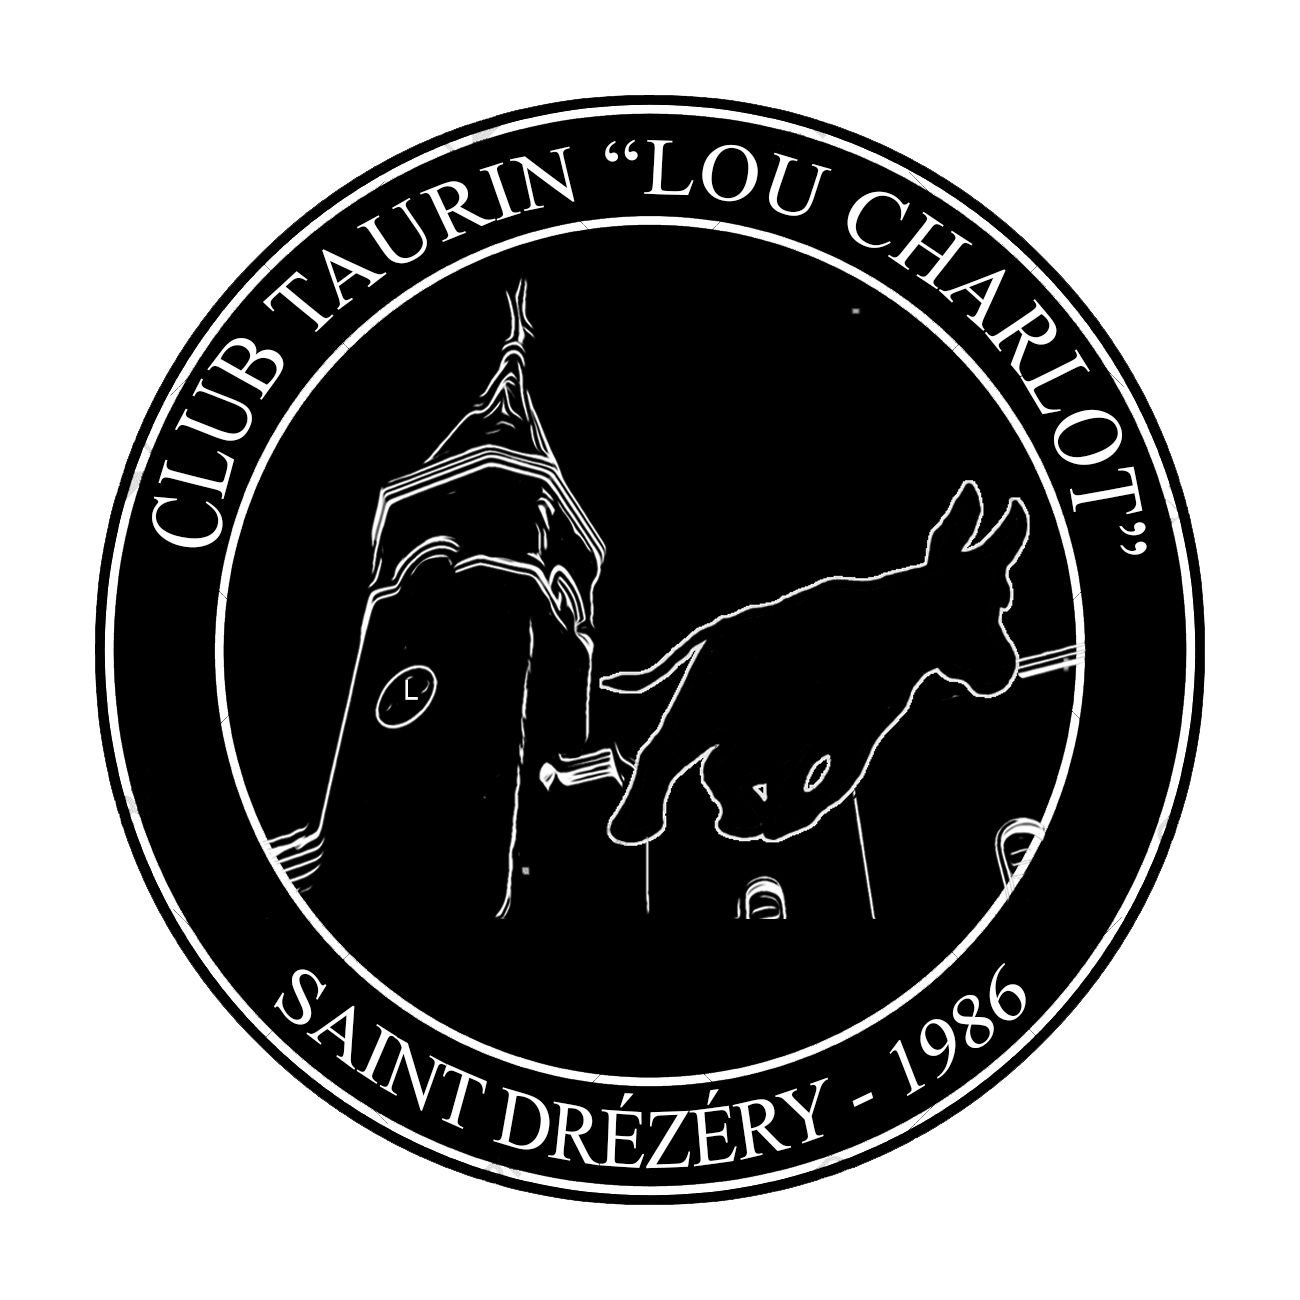 Club Taurin Lou Charlot Logo.jpg